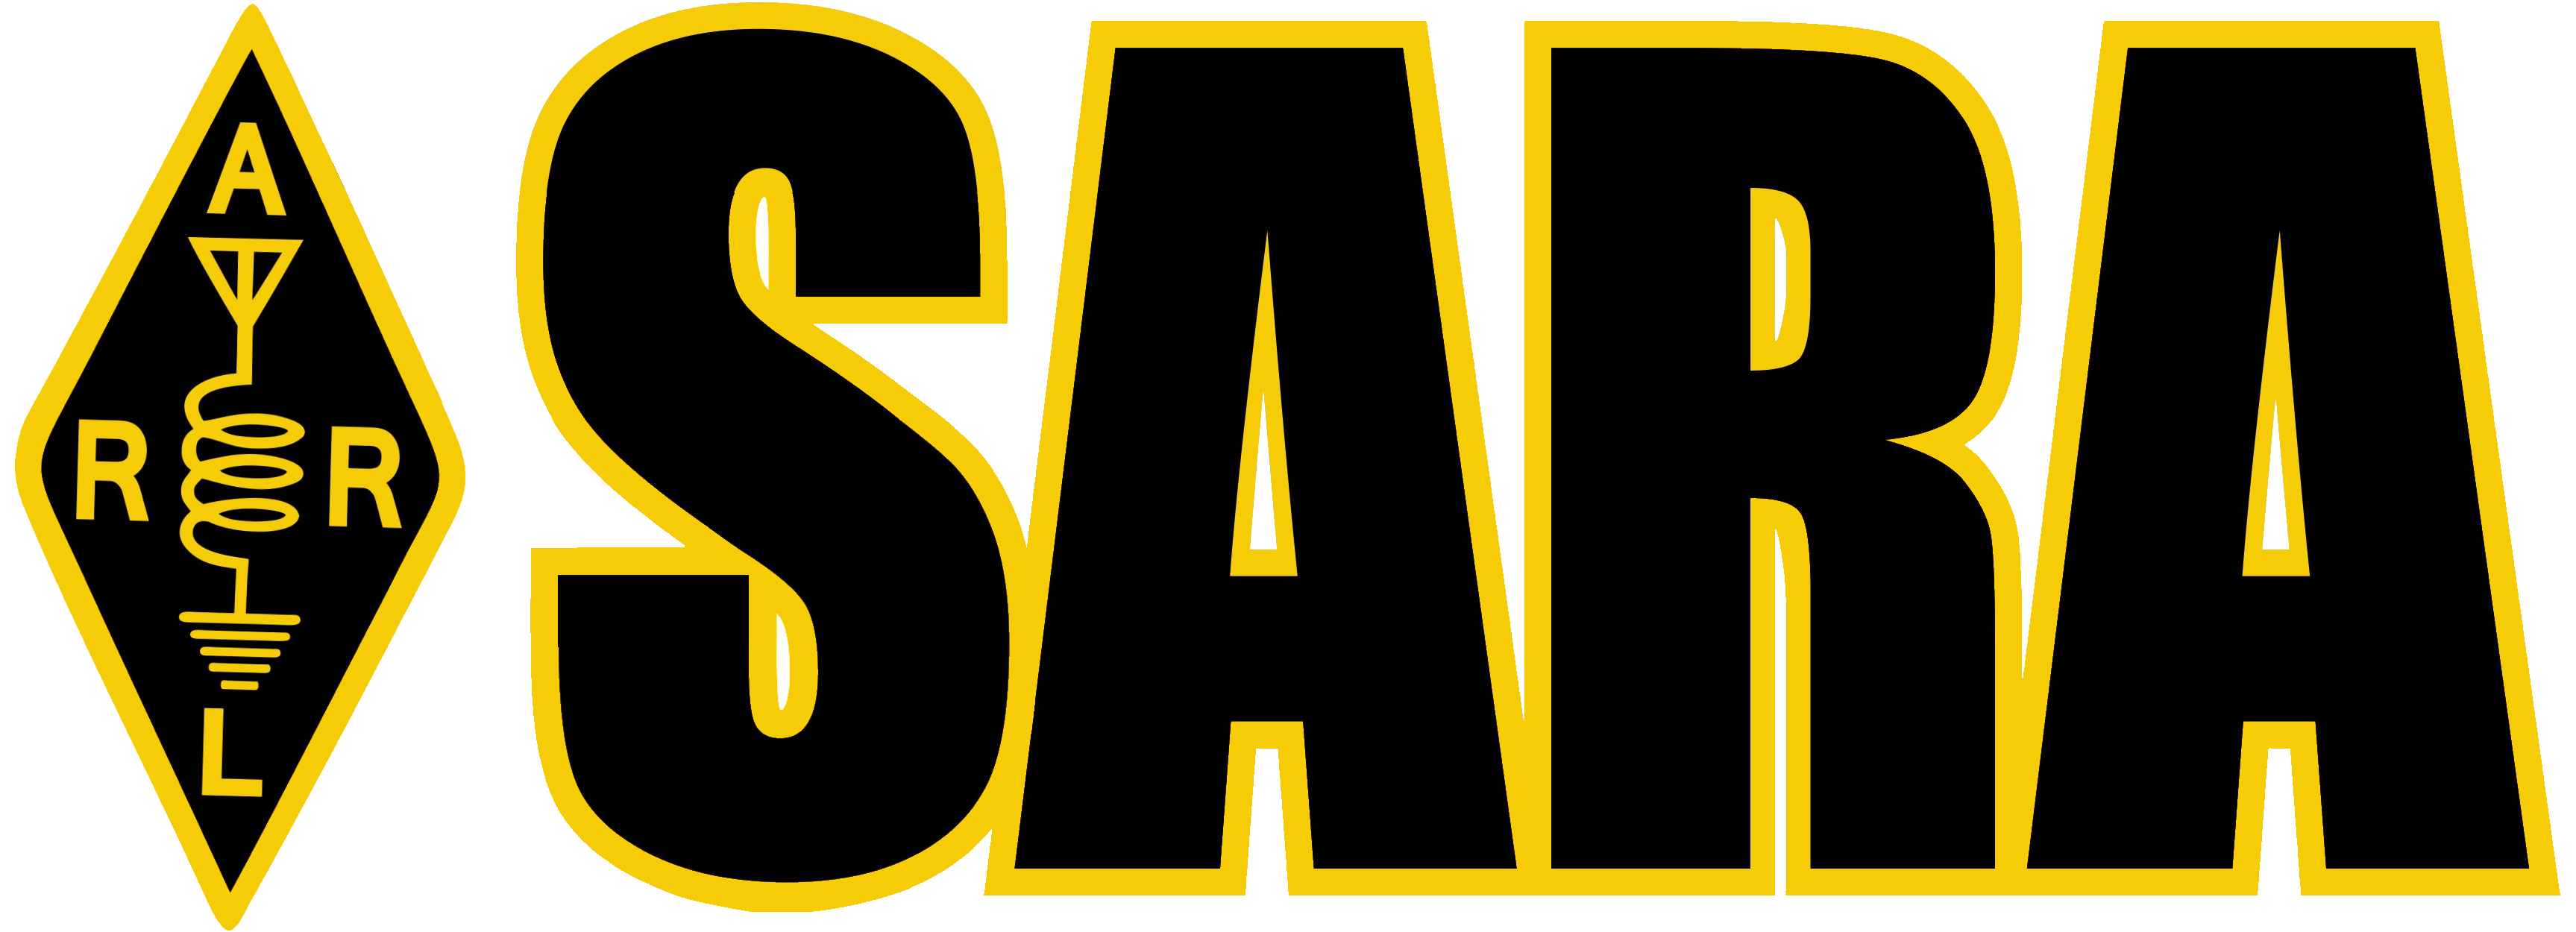 ARRL Logo - SARA Branding and Images – Silvercreek Amateur Radio Association